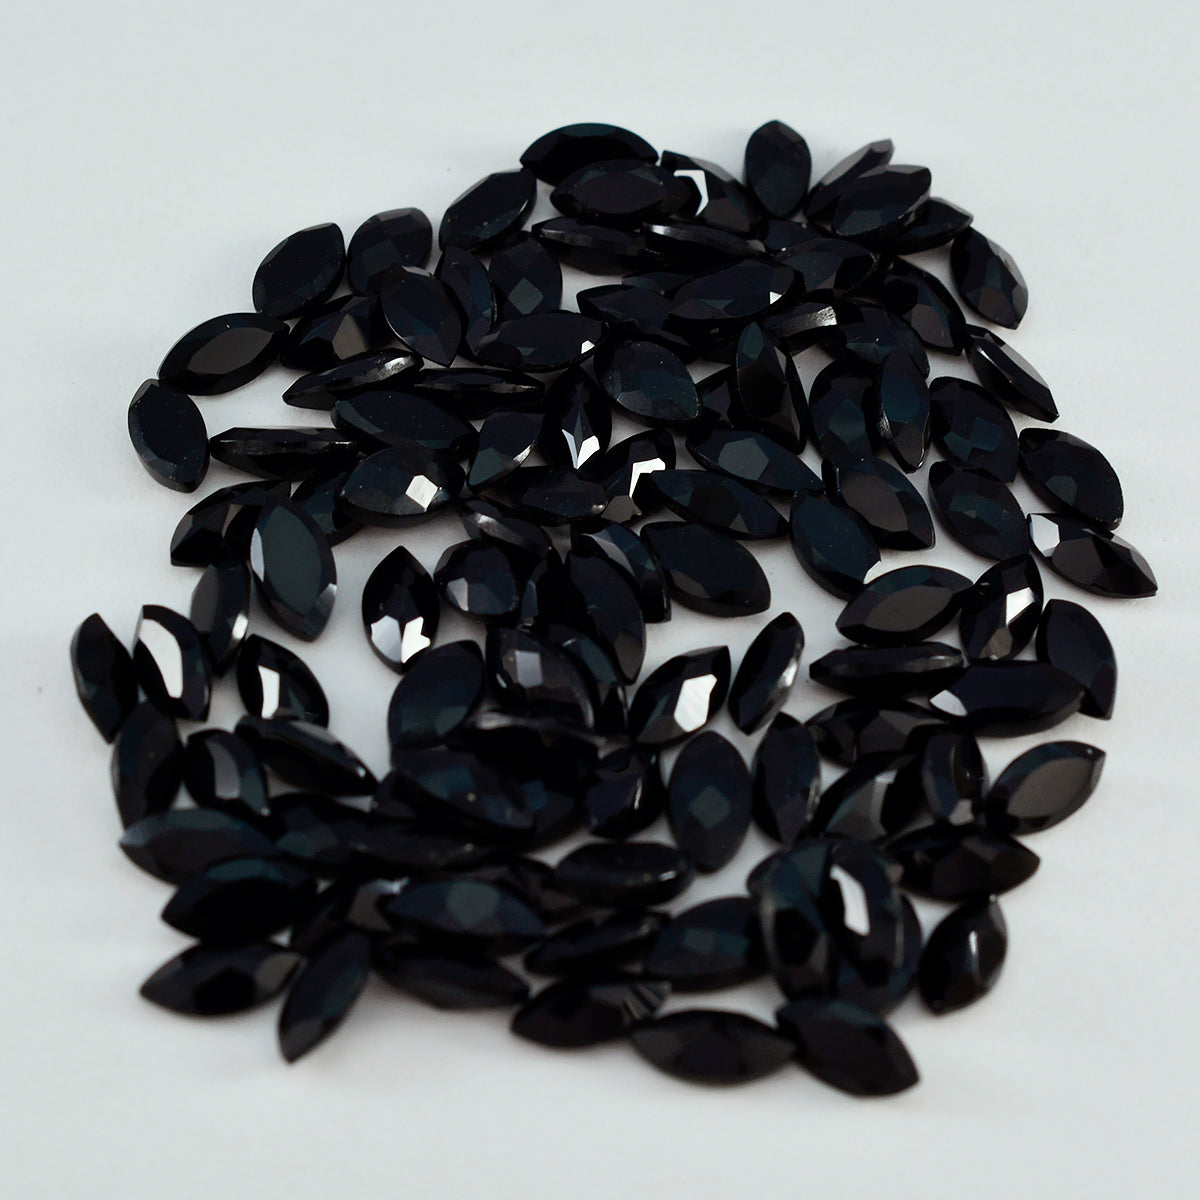 Riyogems 1PC Natural Black Onyx Faceted 5x10 mm Marquise Shape pretty Quality Loose Gem